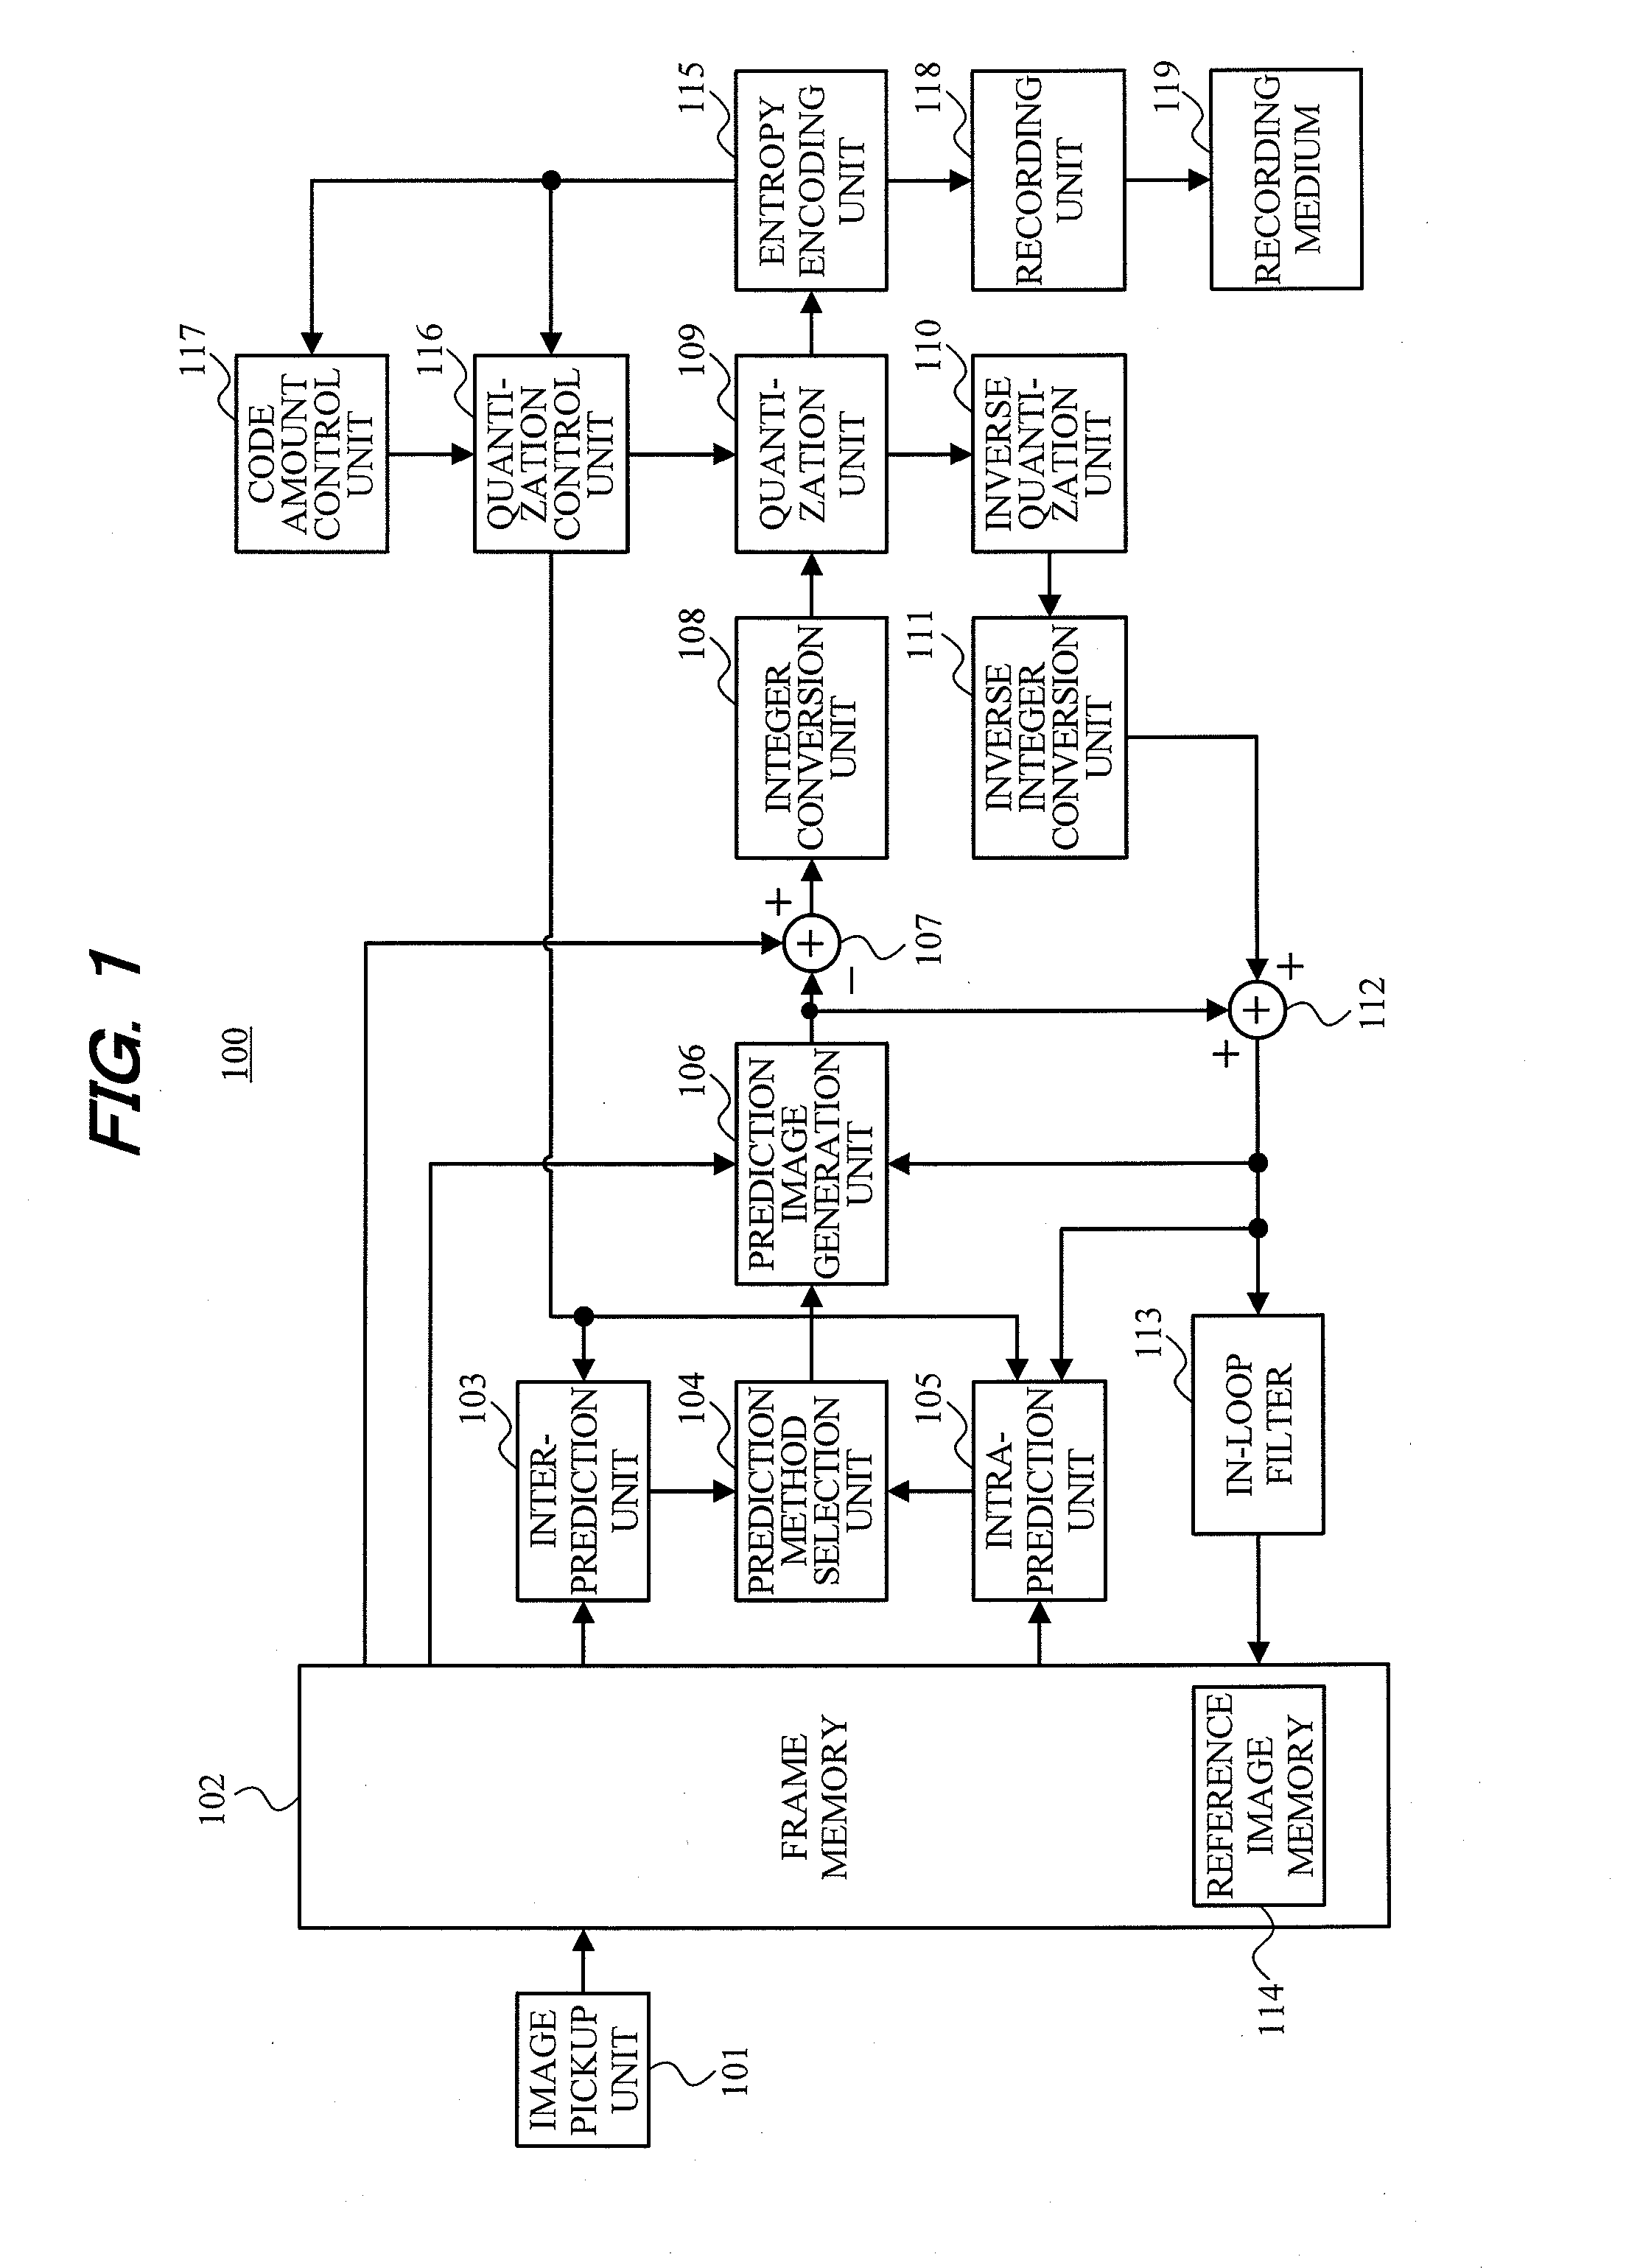 Image encoding apparatus and its control method